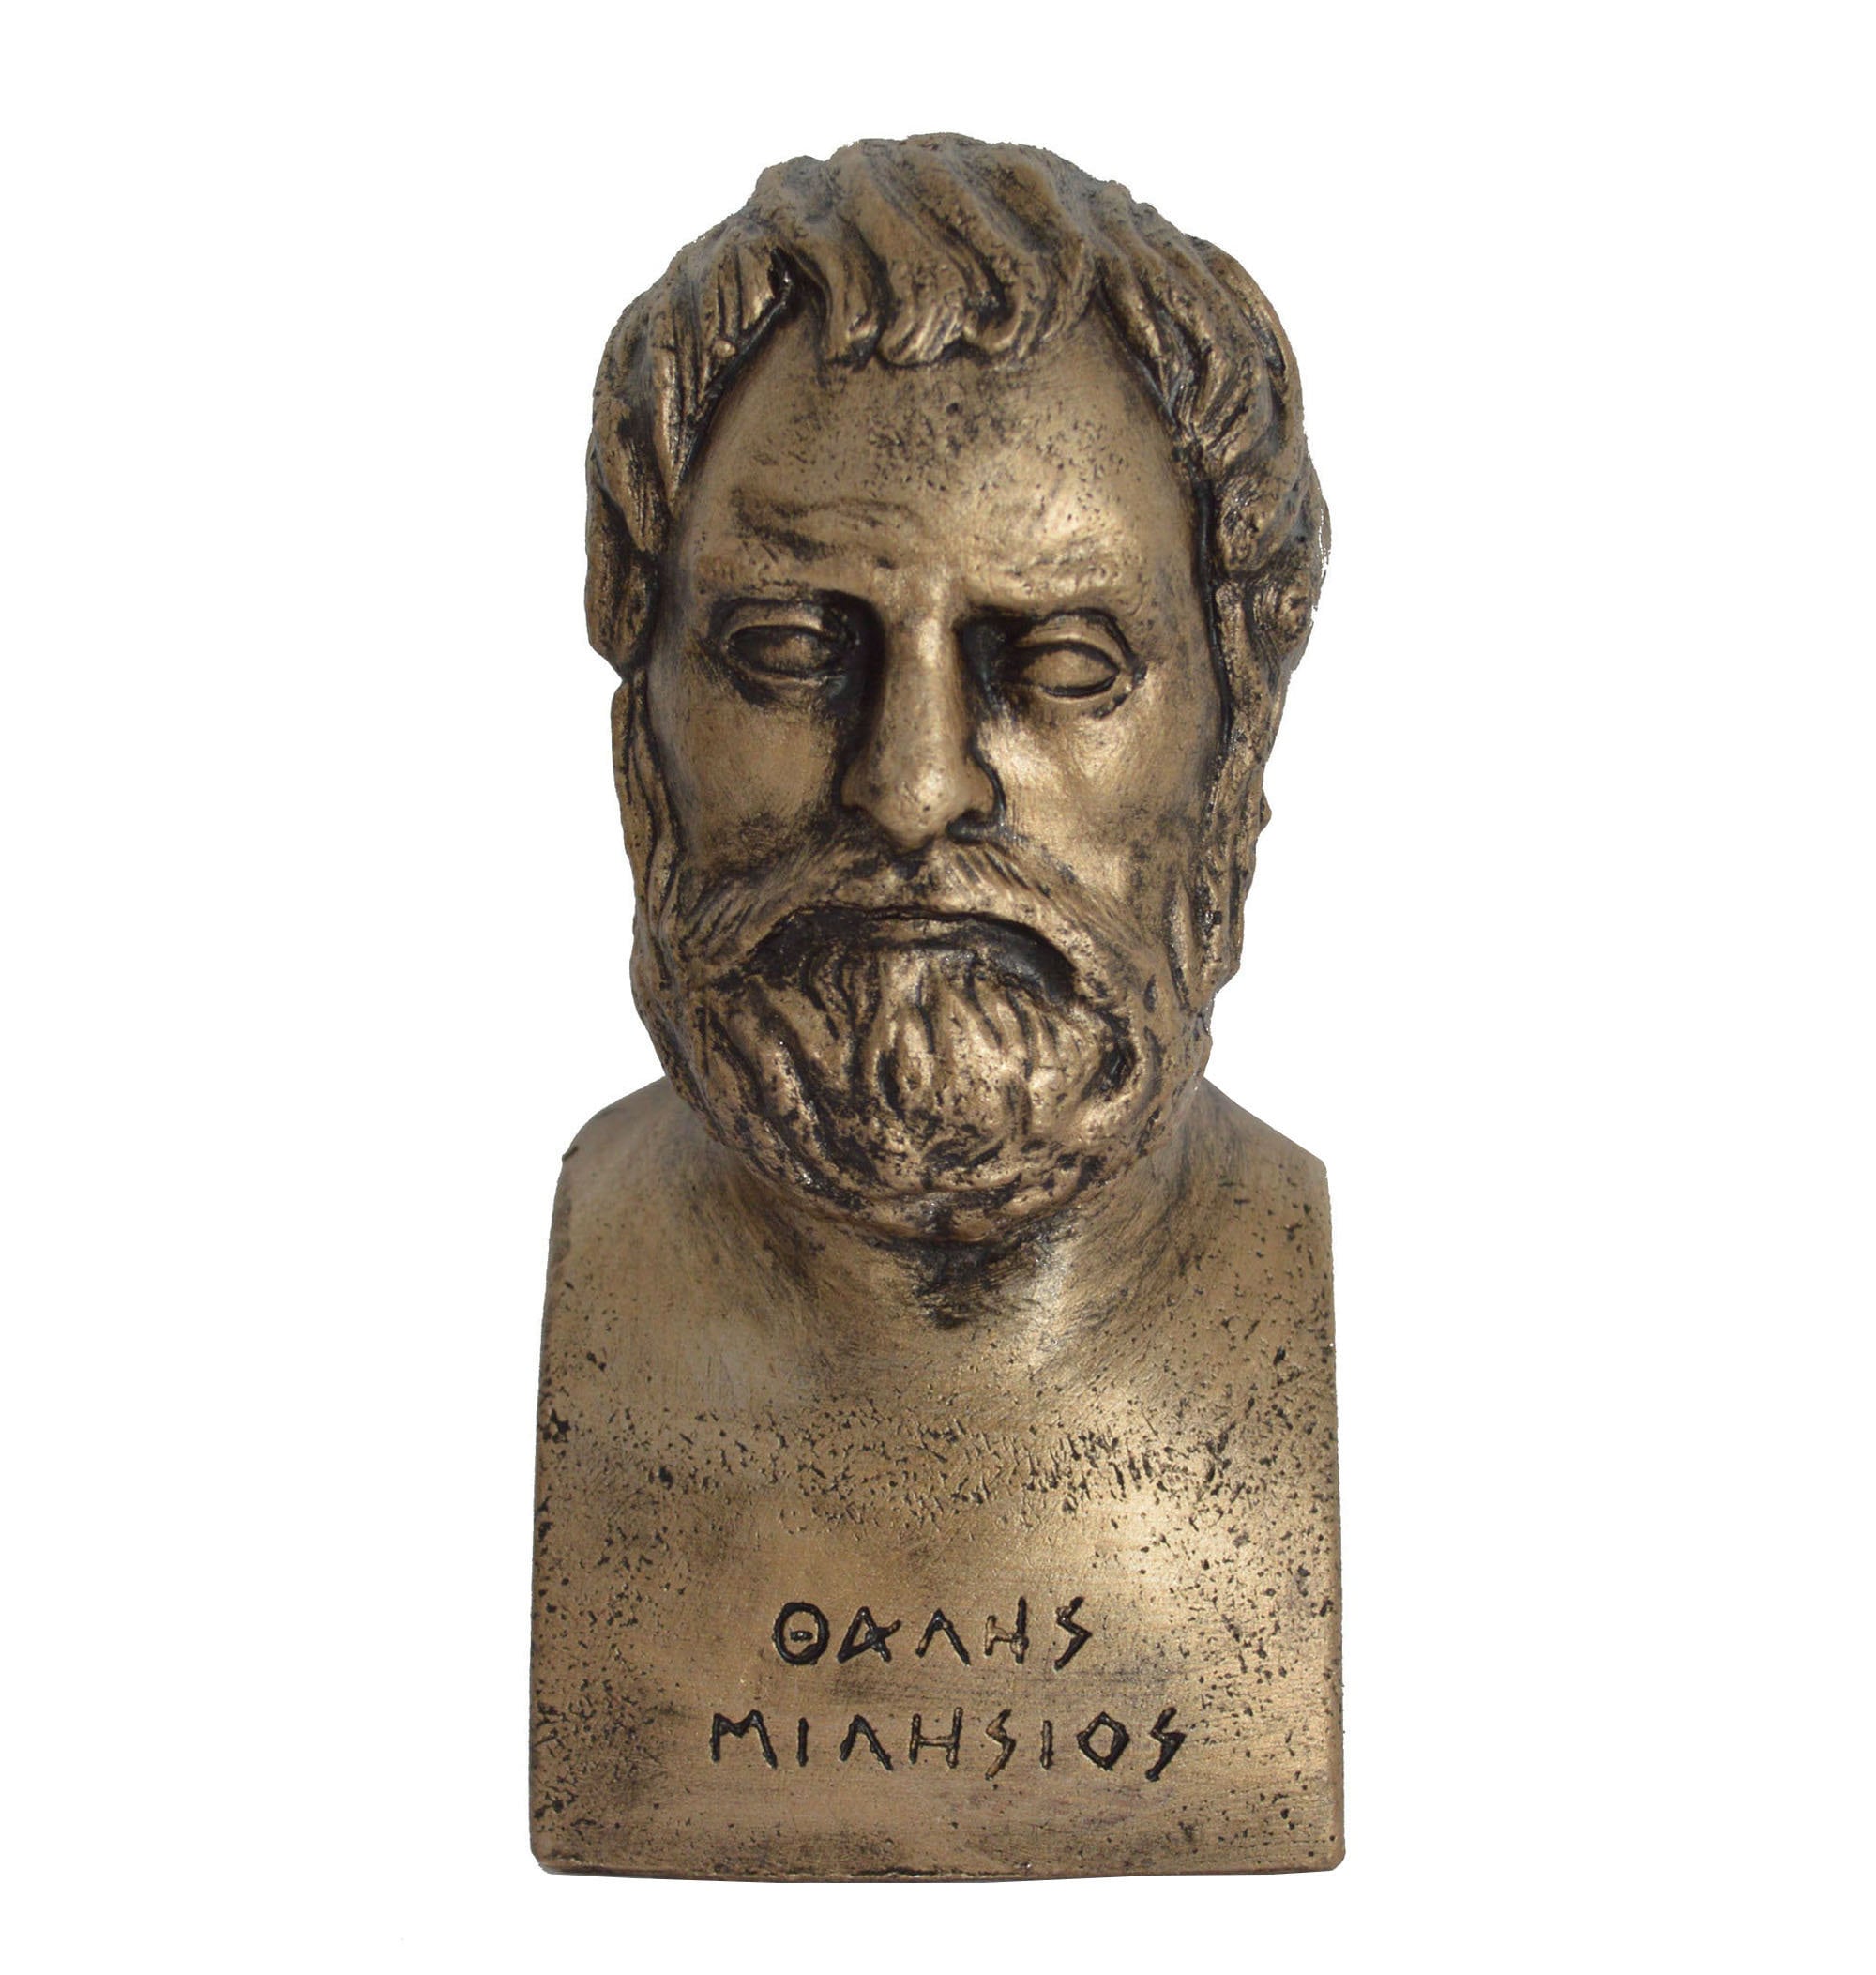 Photograph, Thales of Miletus, Sage of Greece